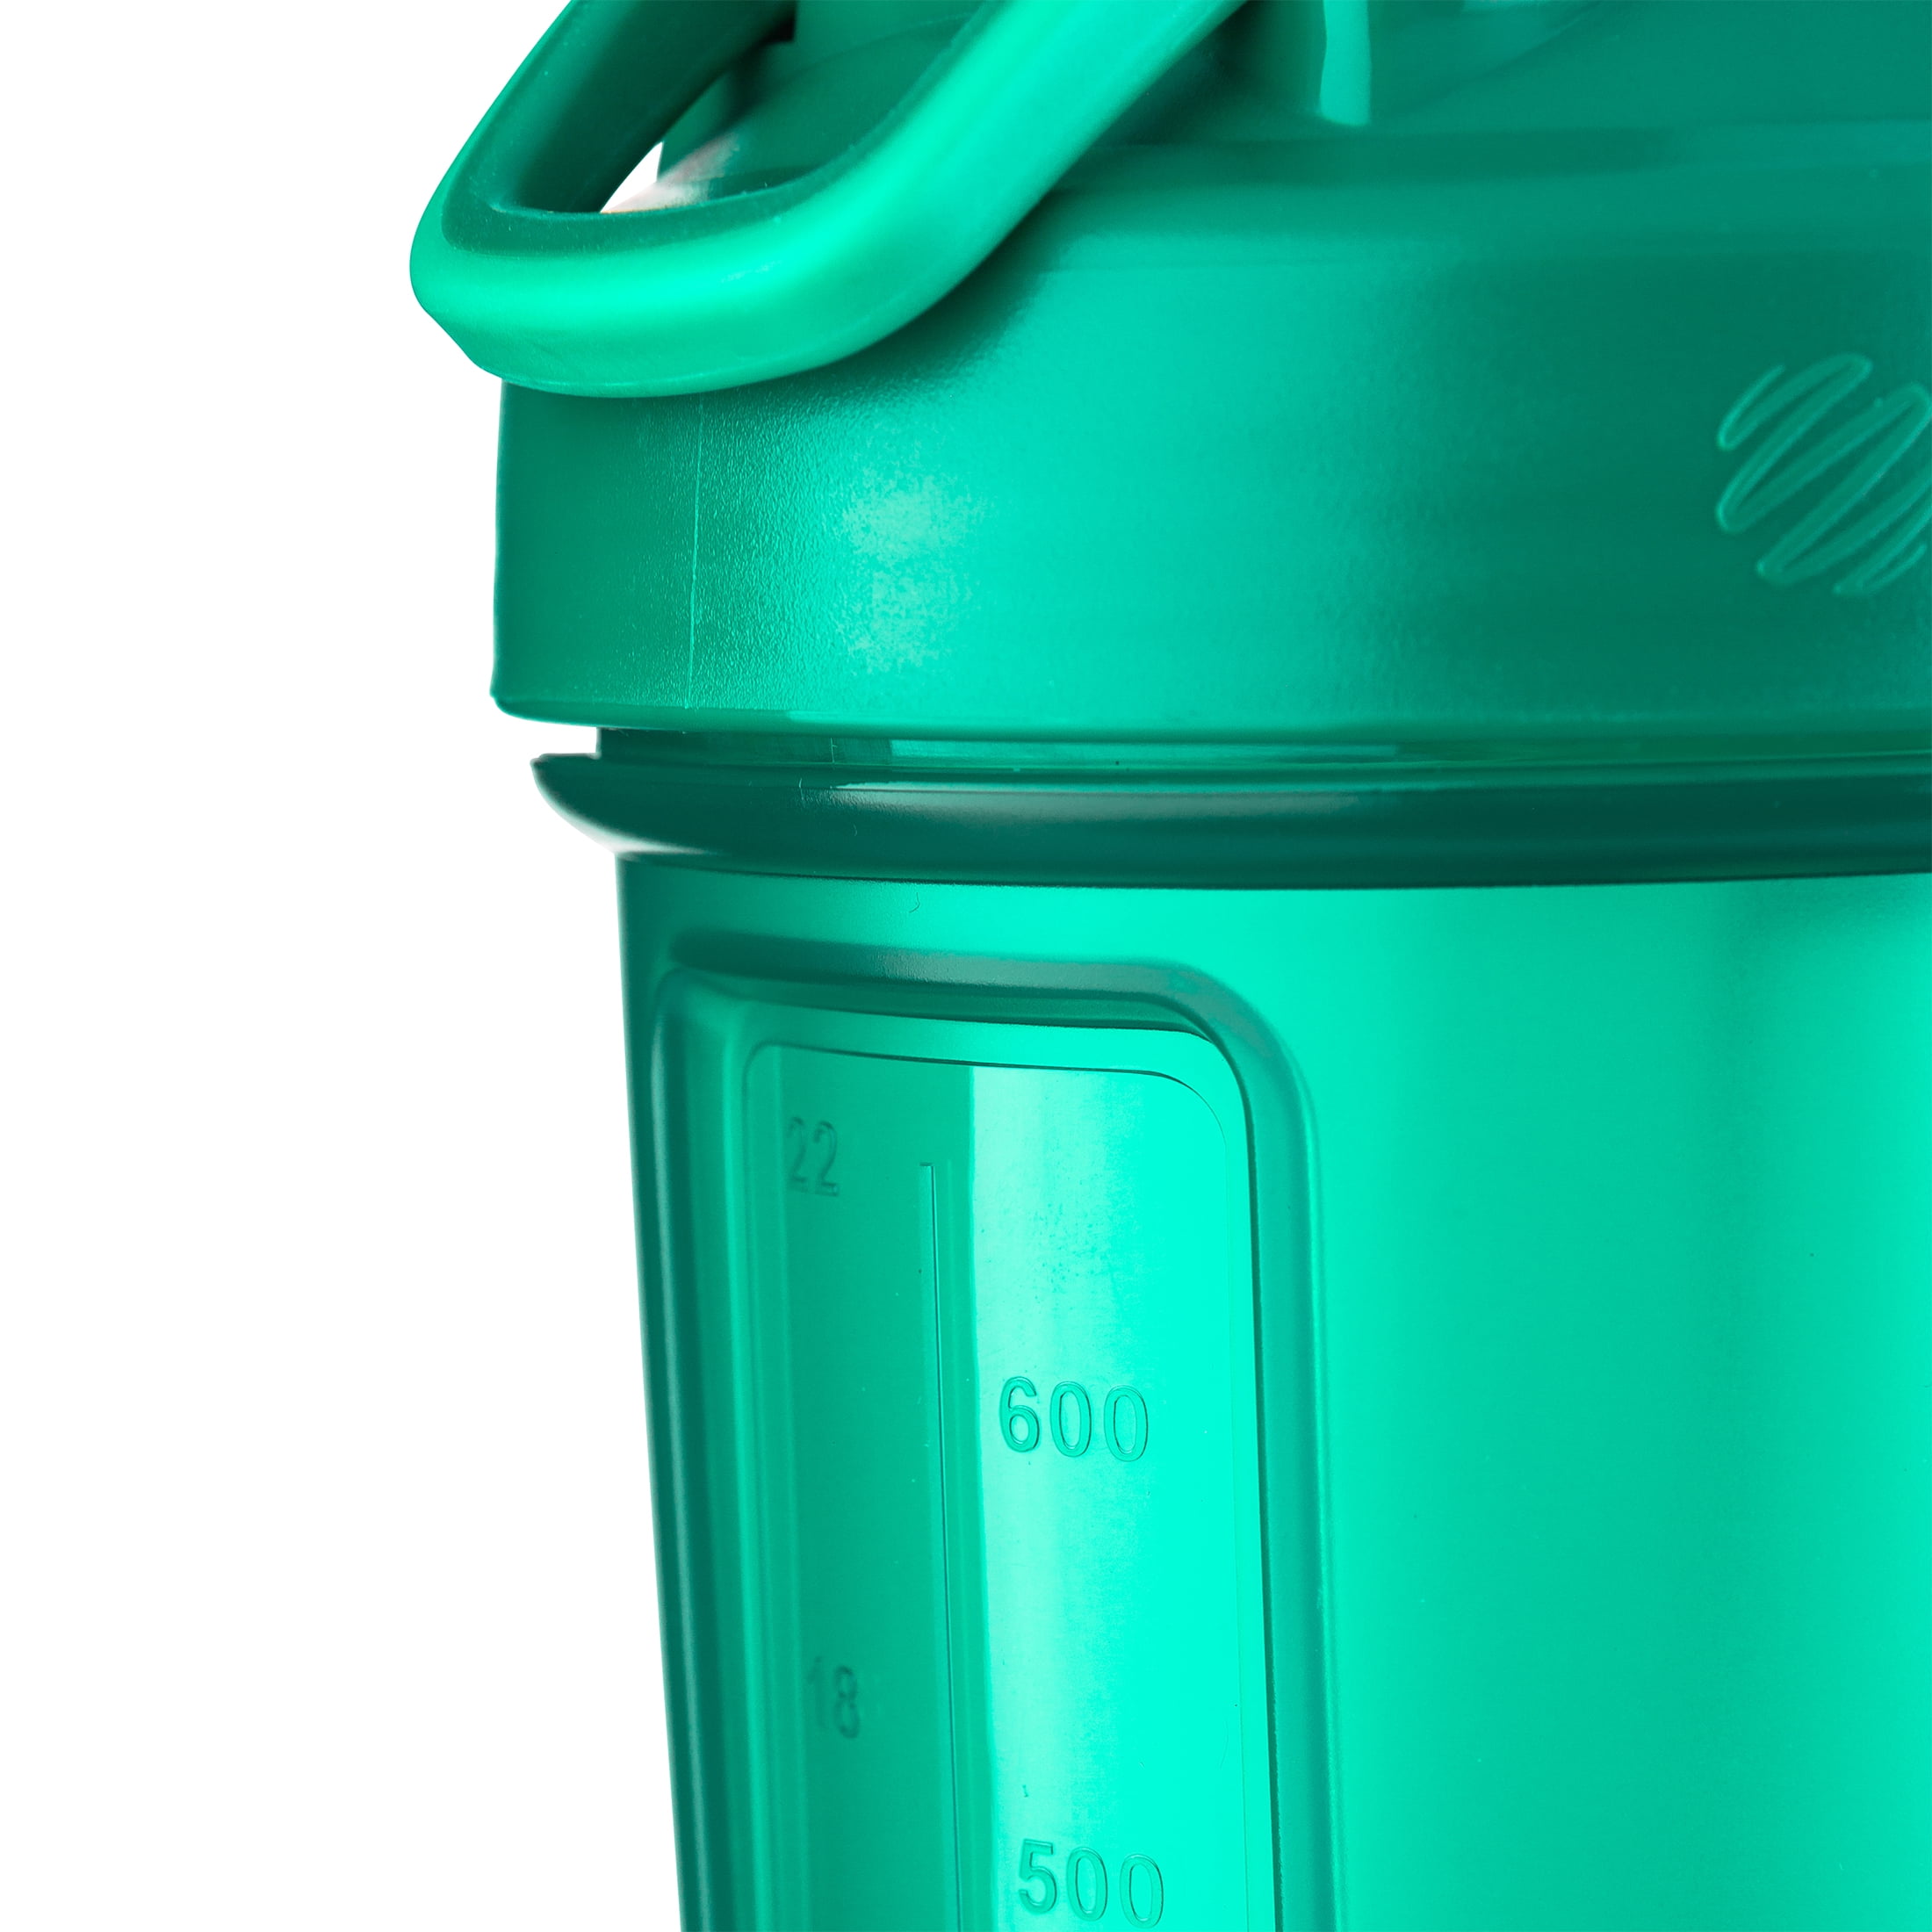 Perfect Shaker KYLO REN Blender Cup Bottle LARGE 28 oz STAR WARS MIXER